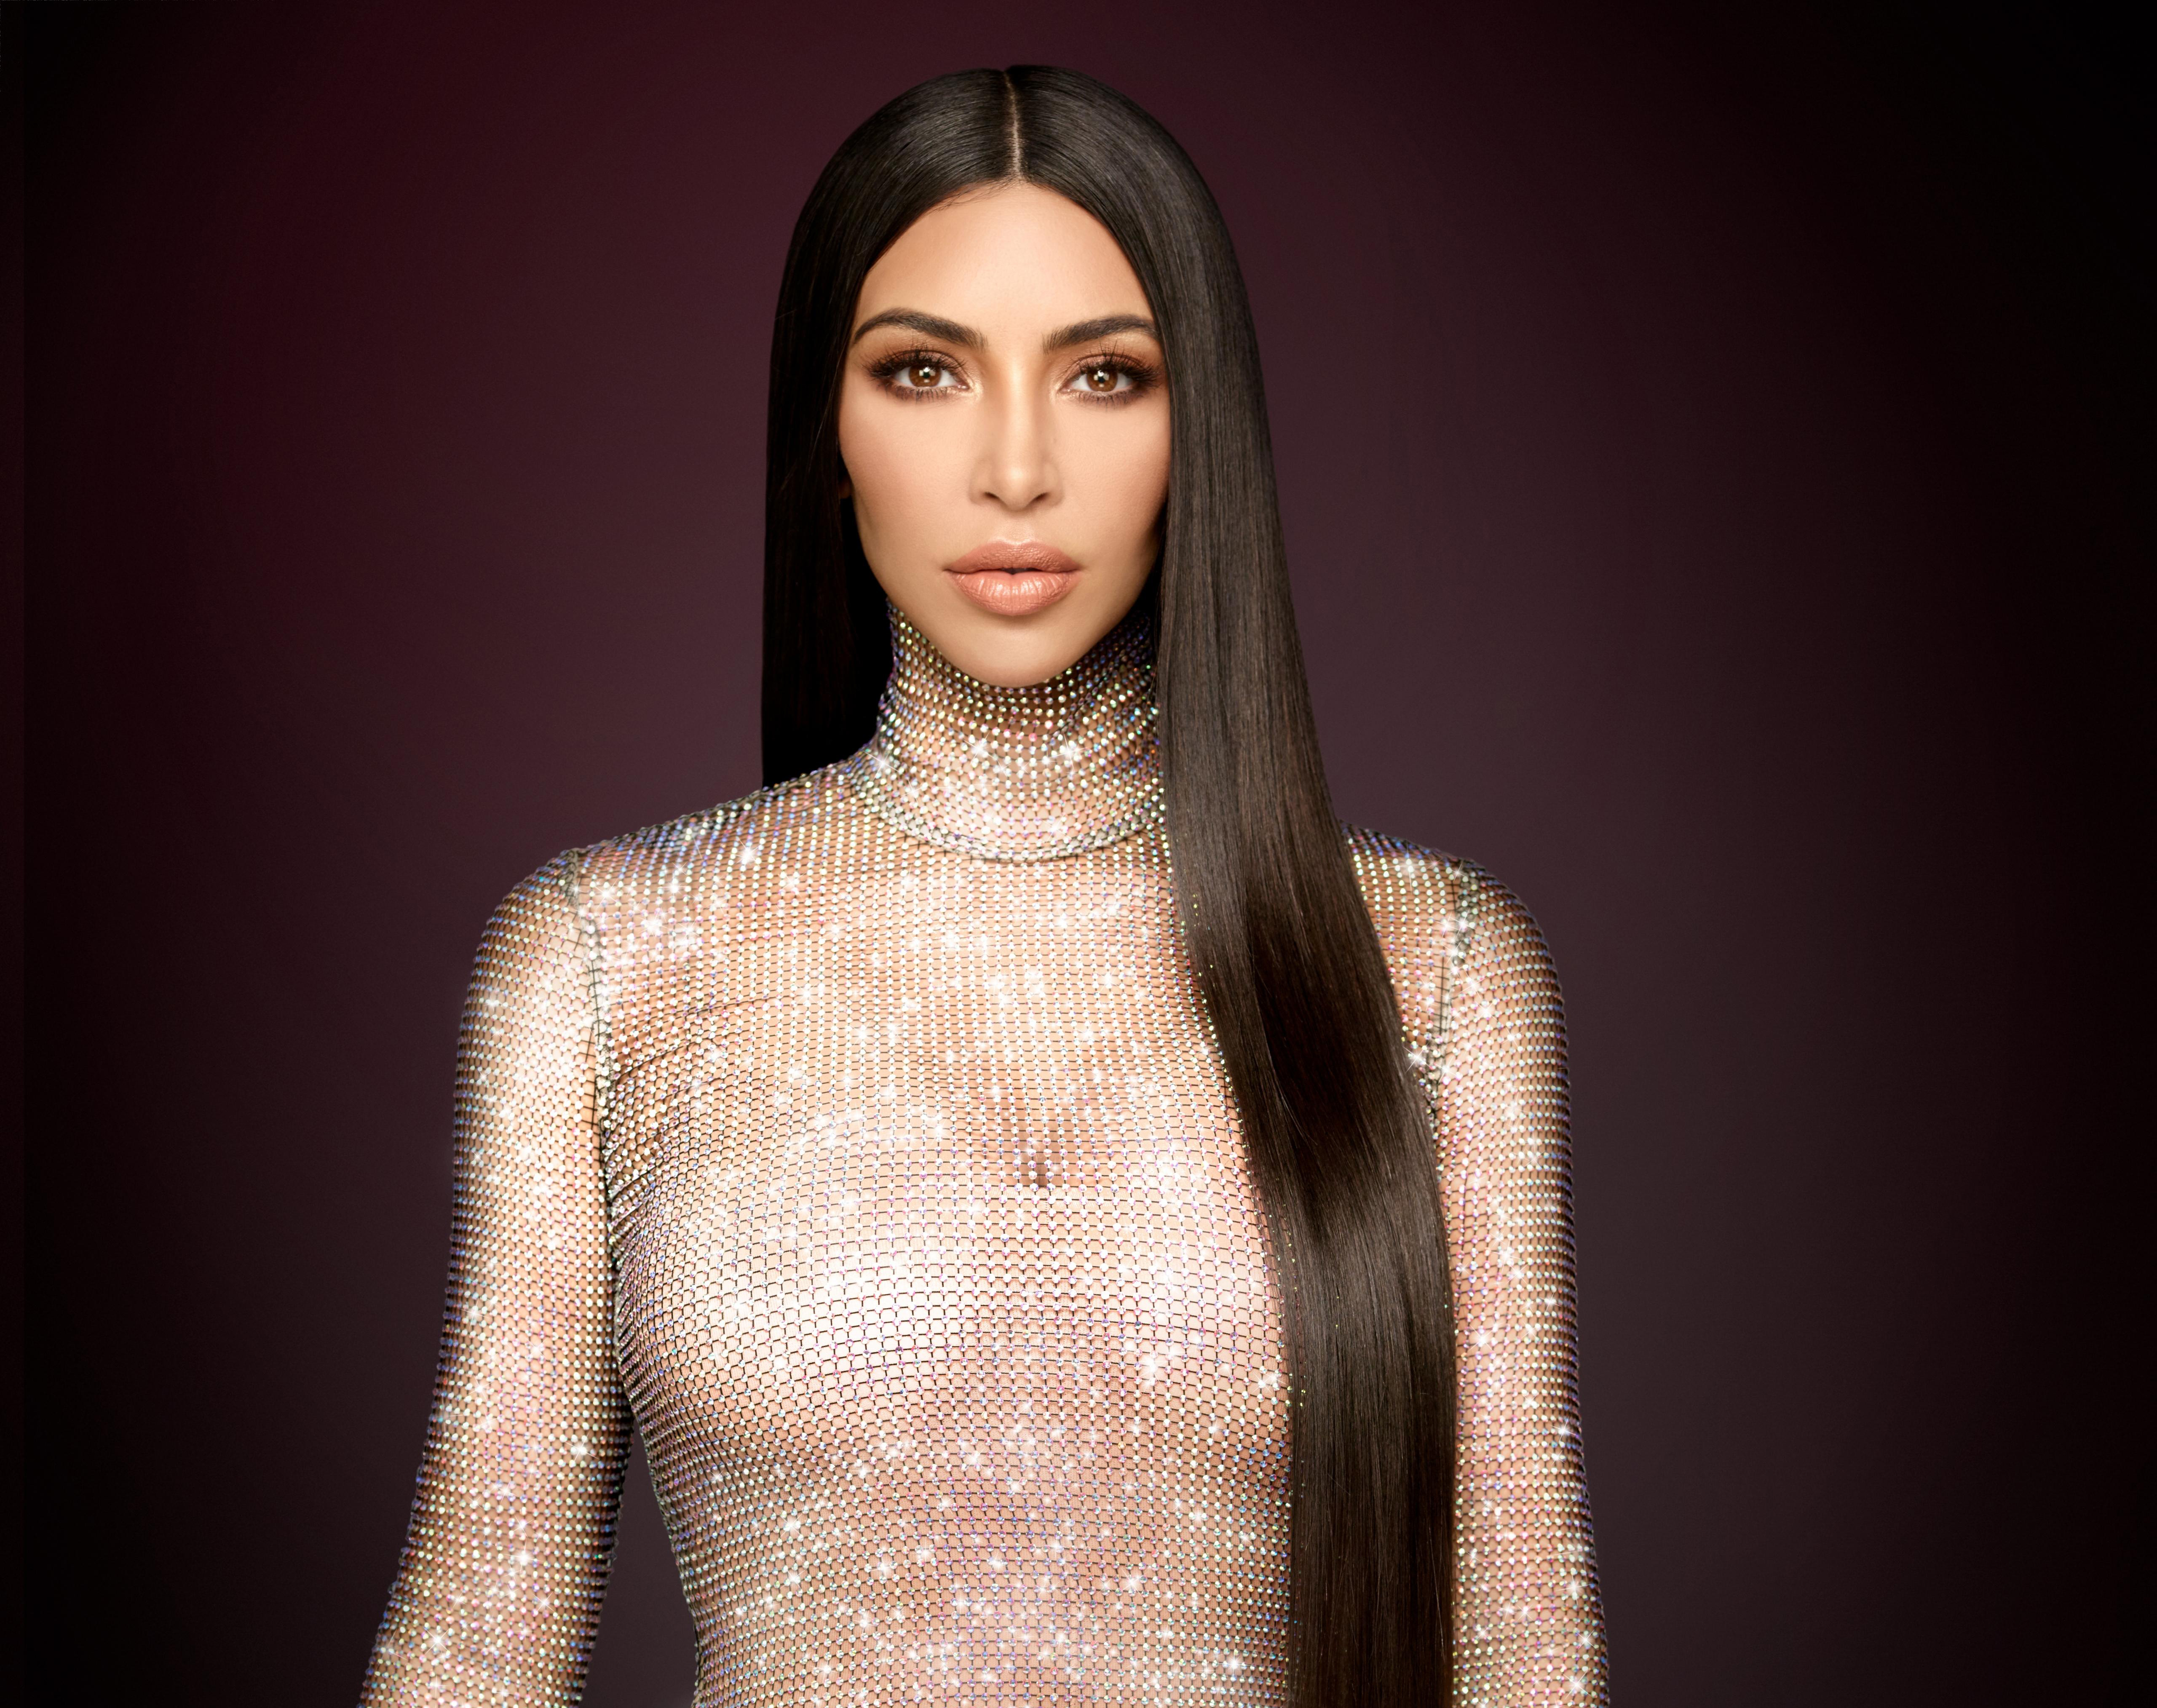 Free photo Brunette Kim Kardashian in a glittery dress